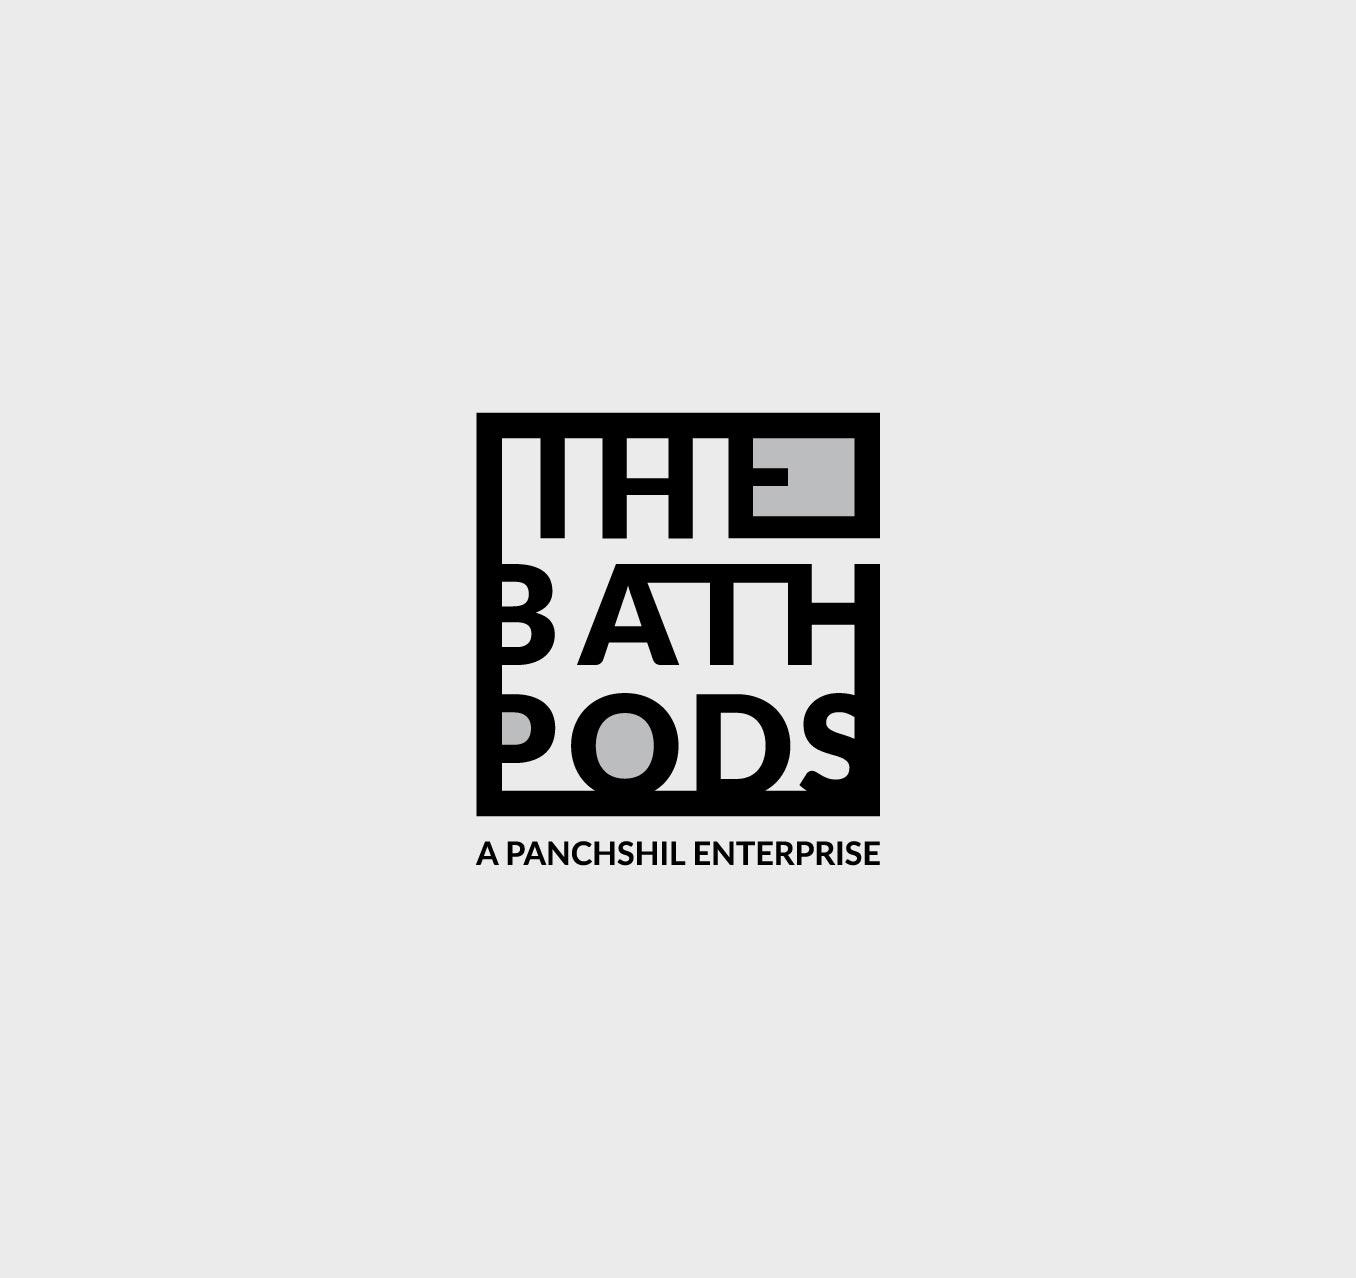 Branding for The Bath Pods